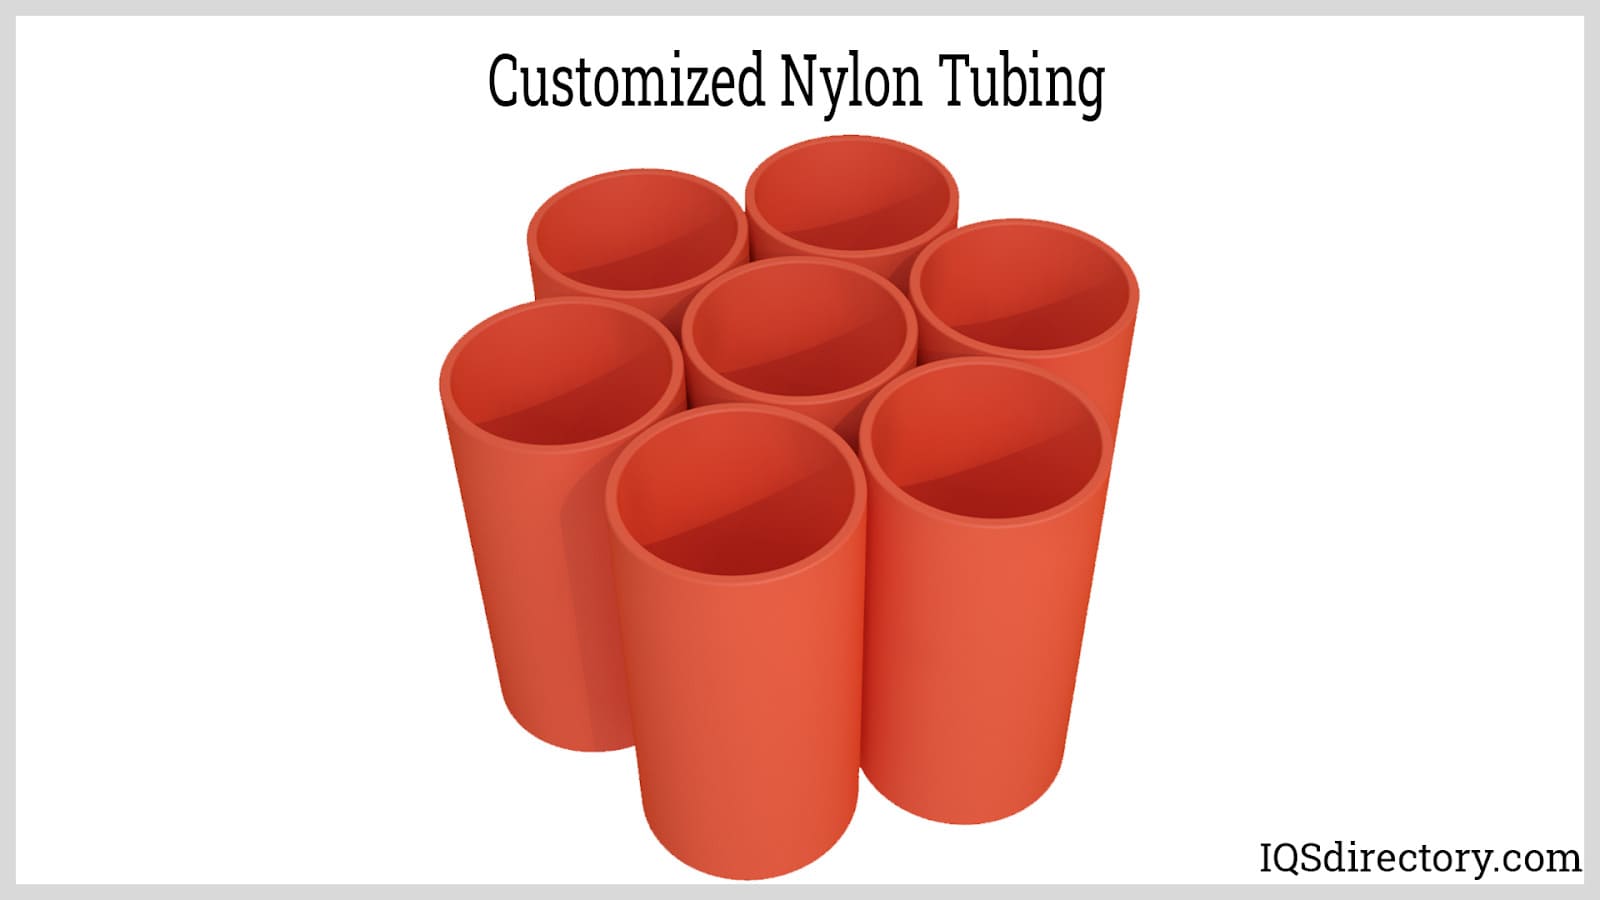 Customized Nylon Tubing